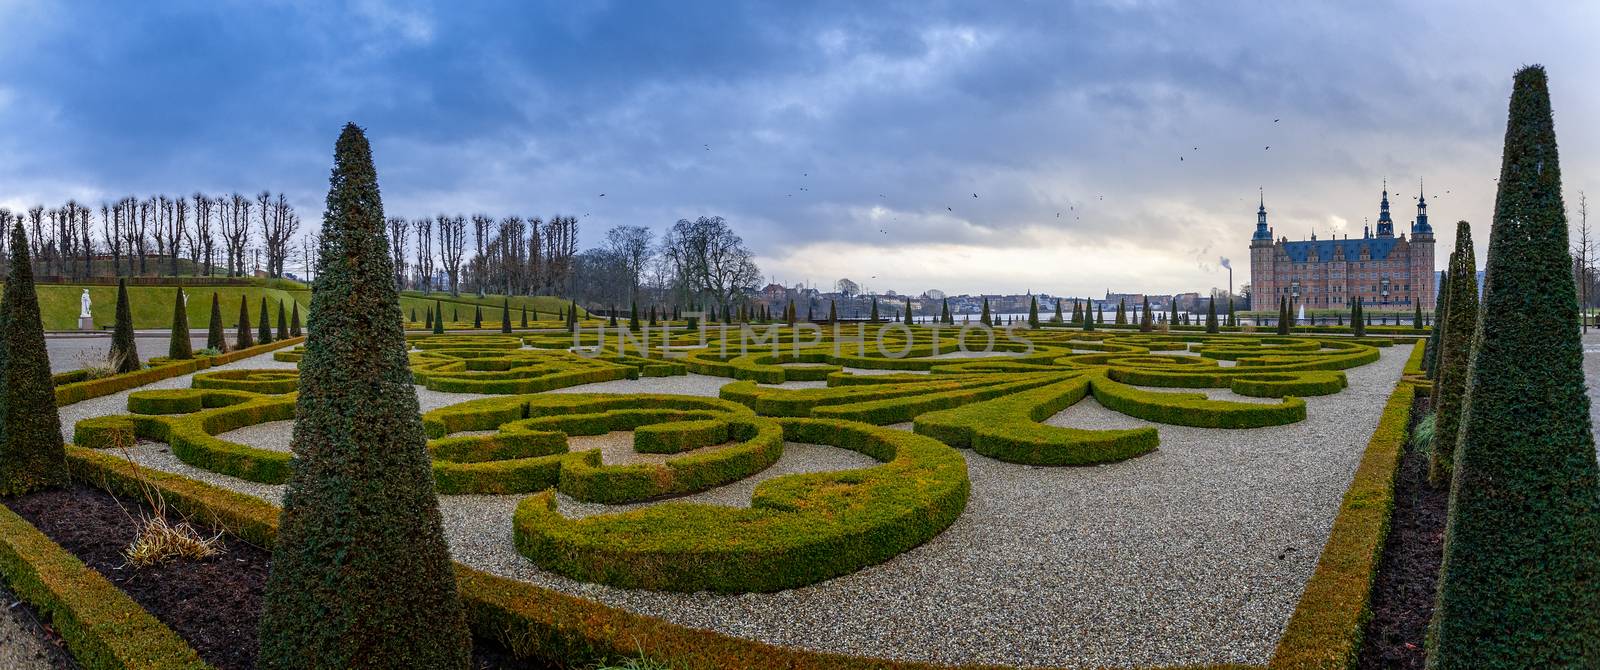 Frederiksborg castle , with ornamental landscape gardened shrubs in the foreground, Hillerod, Denmark